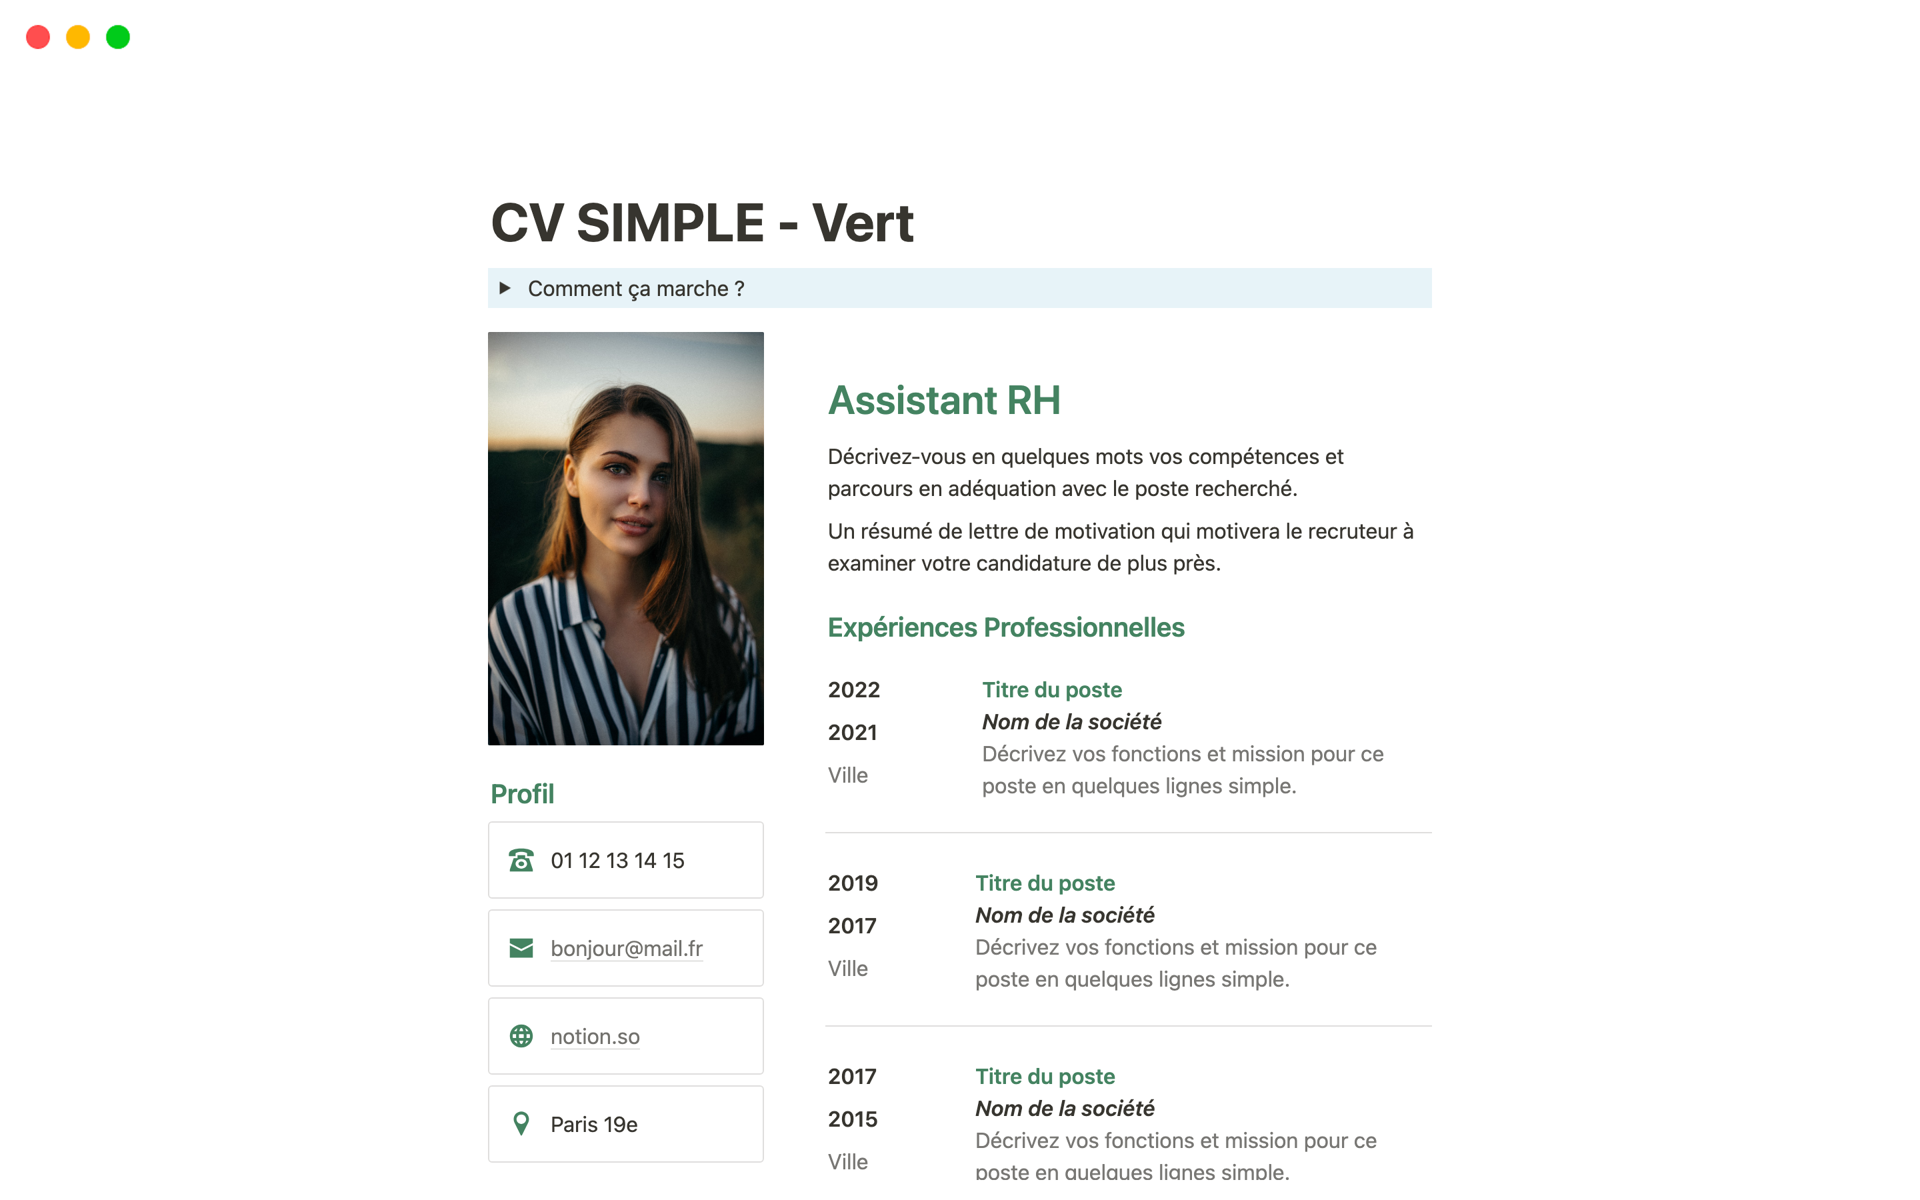 Vista previa de una plantilla para CV simple vert en Français